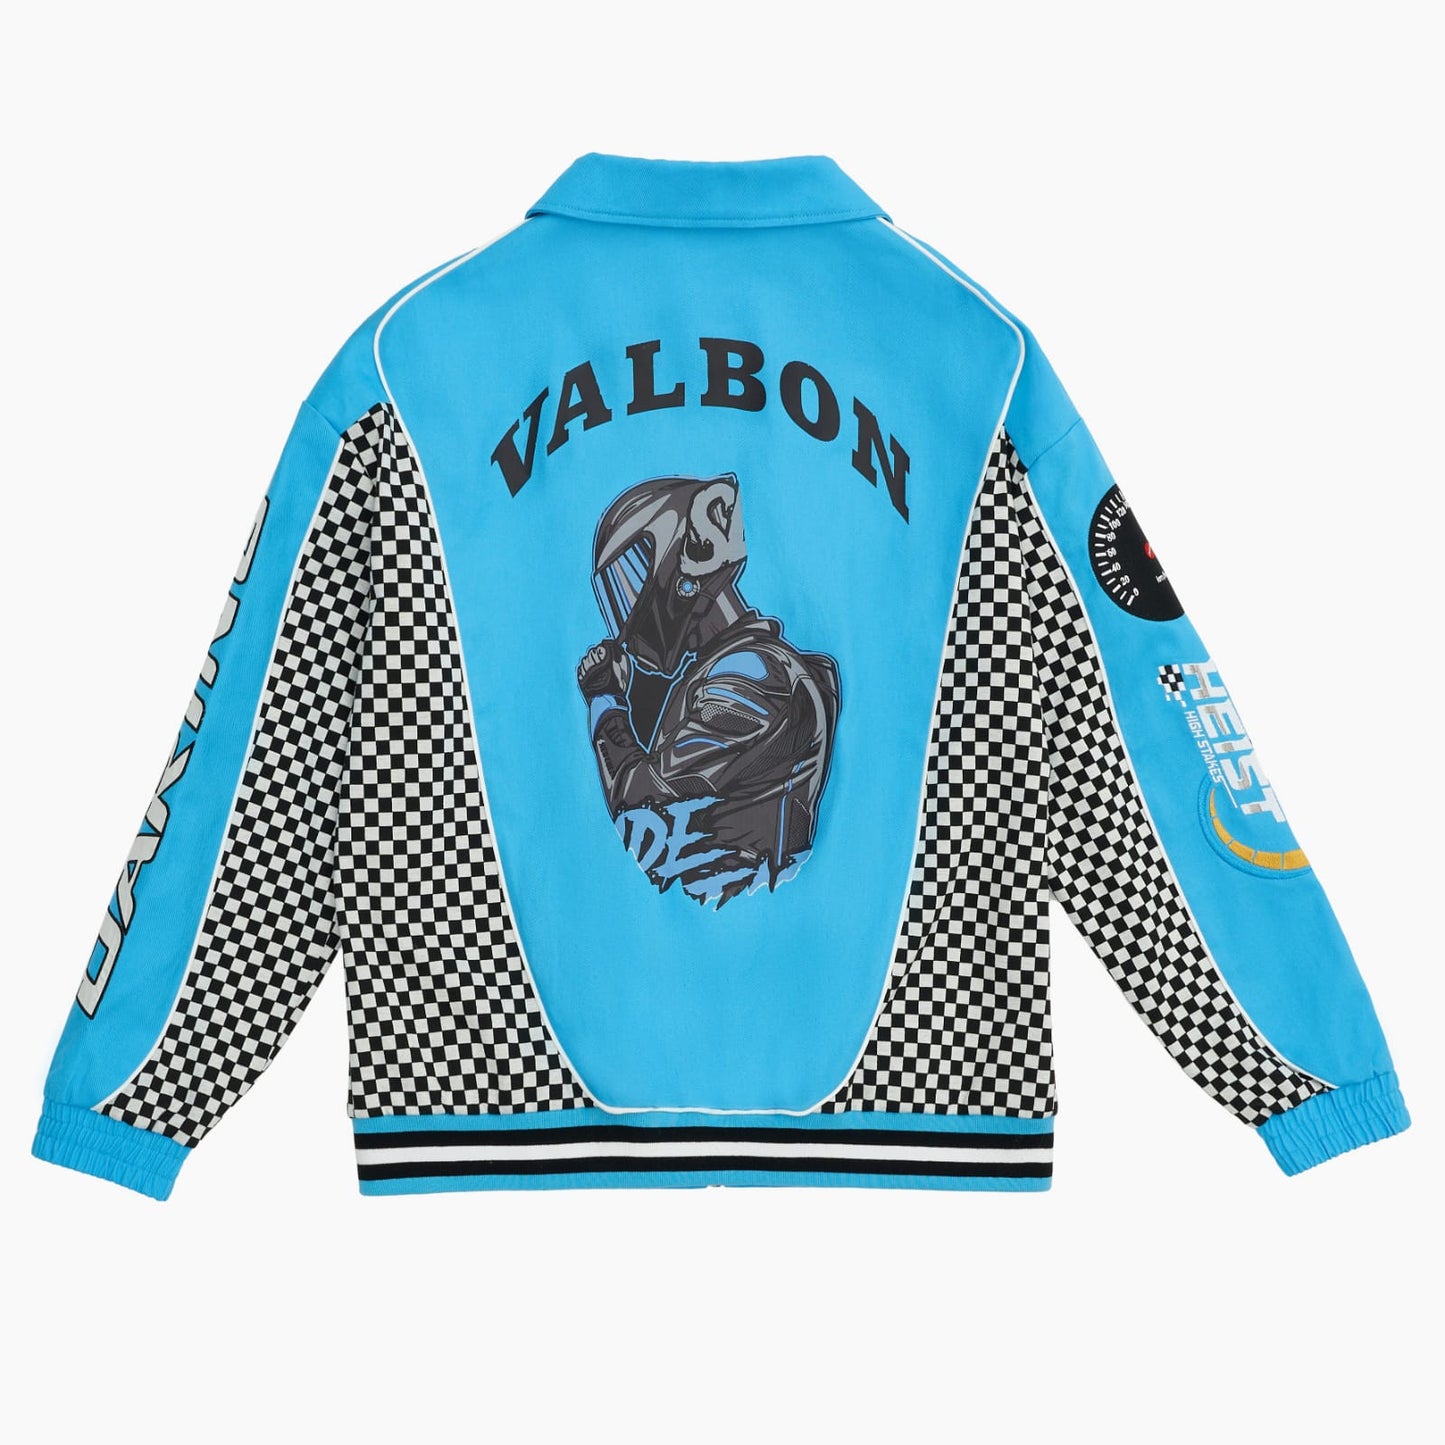  Valbon Racing-Jacket-in-Blue